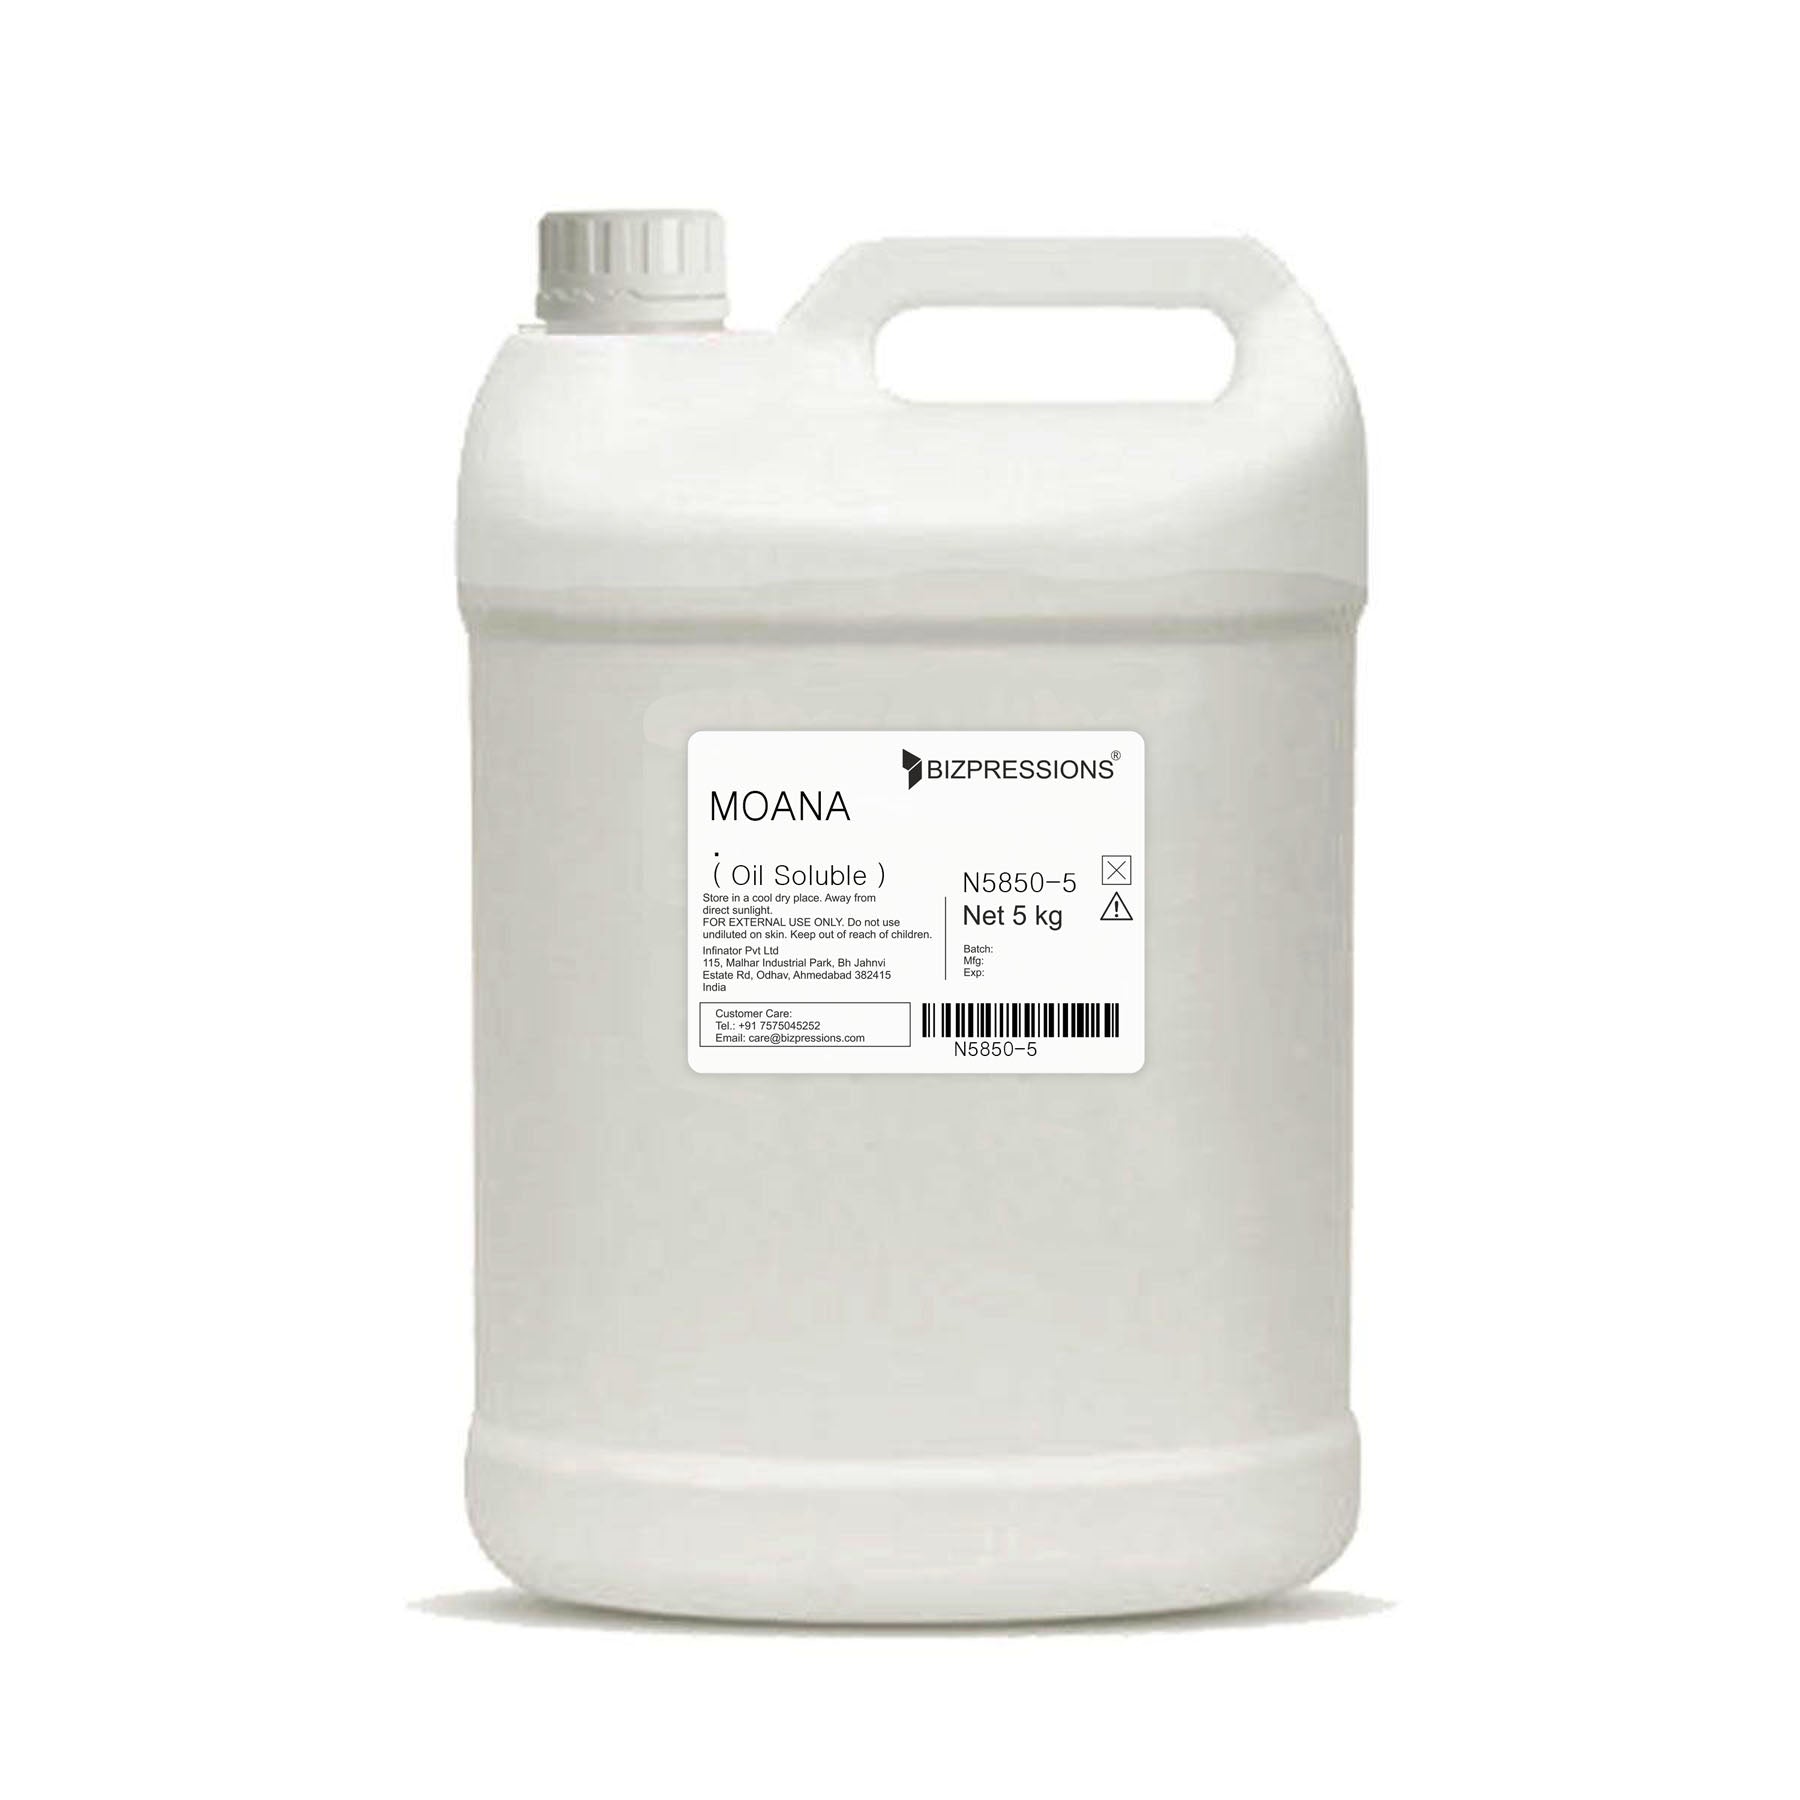 MOANA - Fragrance ( Oil Soluble ) - 5 kg